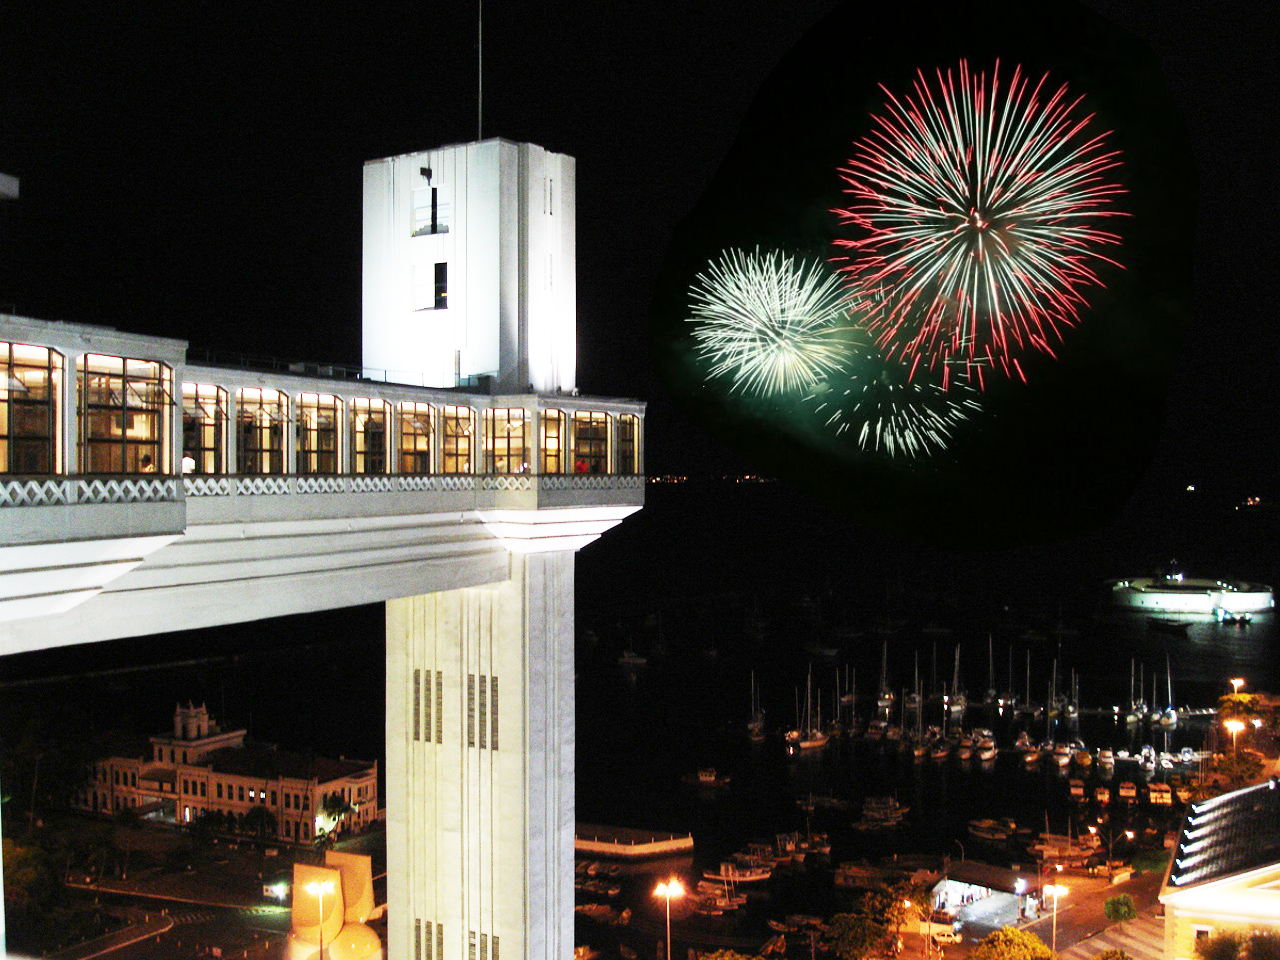 Festa de Reveillon sai do Comércio e vai ser realizada na Boca do Rio